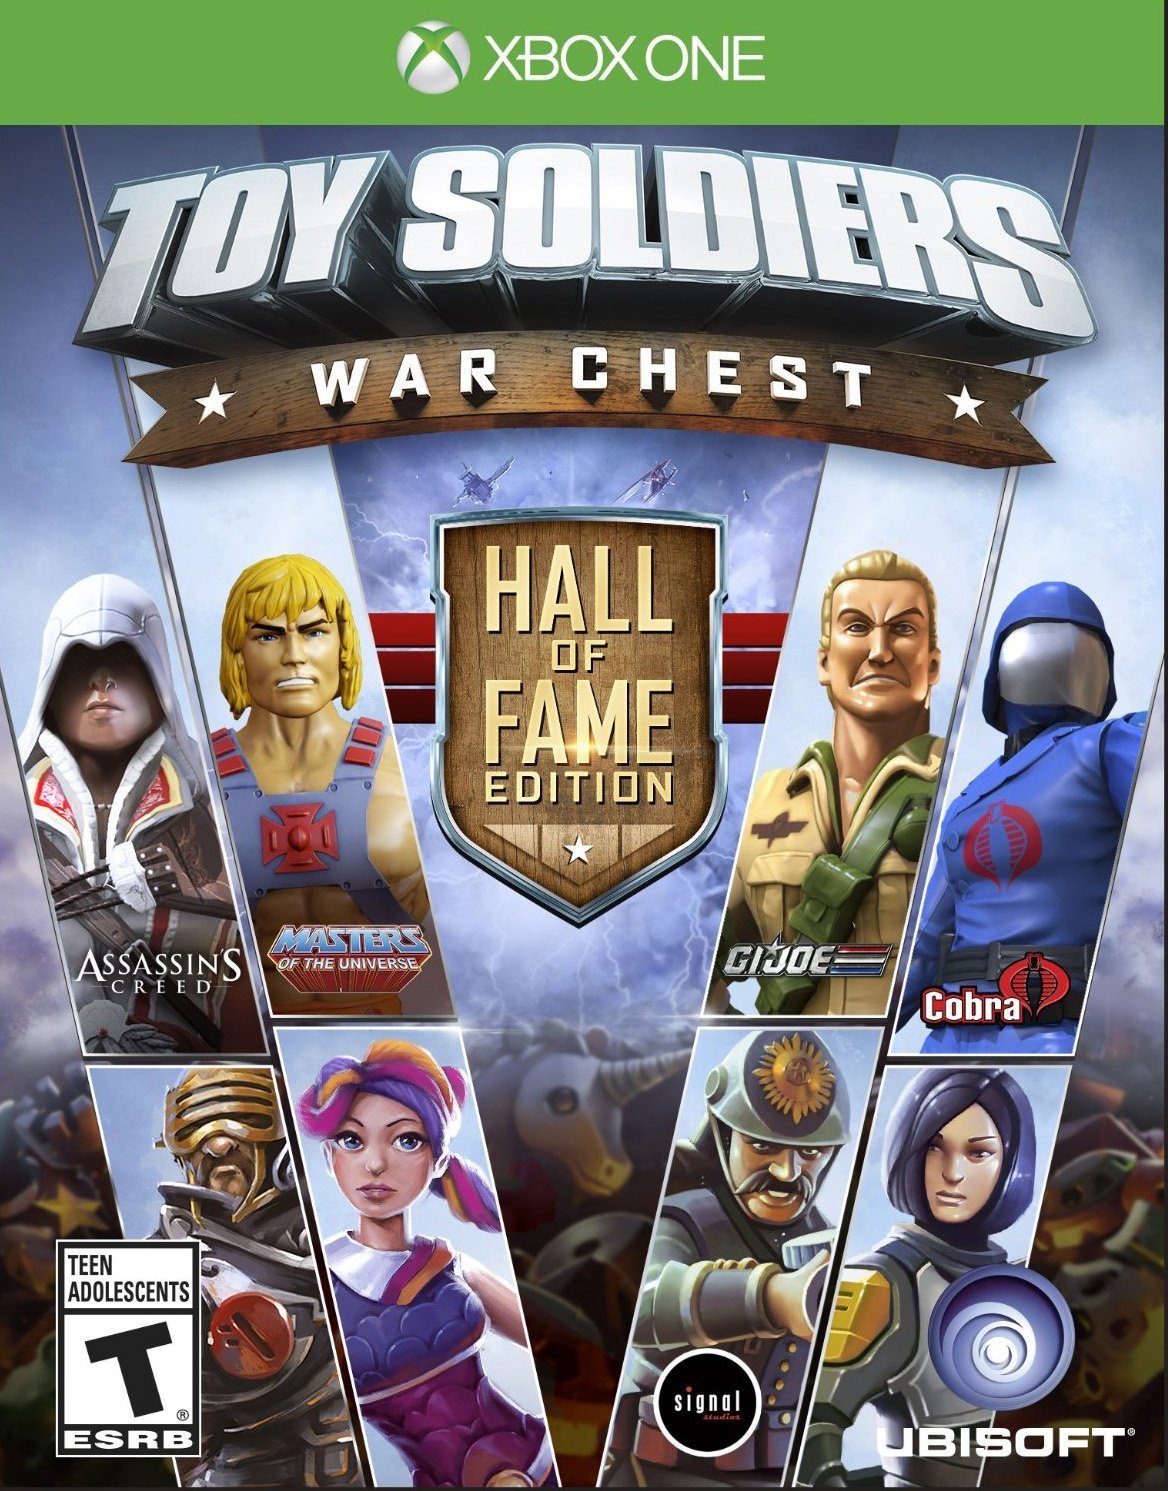 Toy Soldiers: War Chest